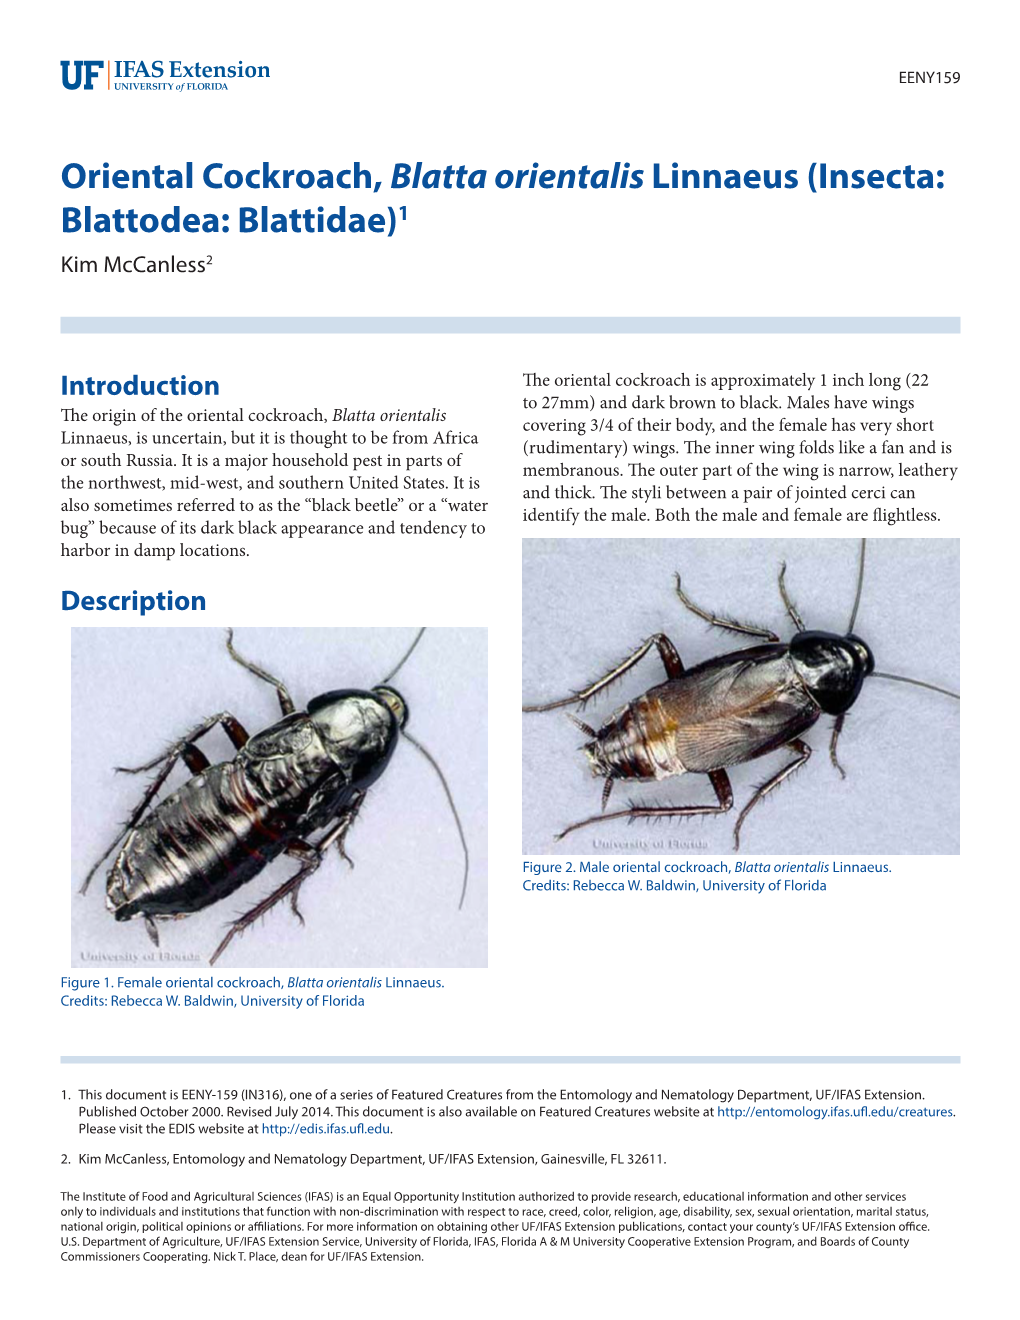 Oriental Cockroach, Blatta Orientalis Linnaeus (Insecta: Blattodea: Blattidae)1 Kim Mccanless2